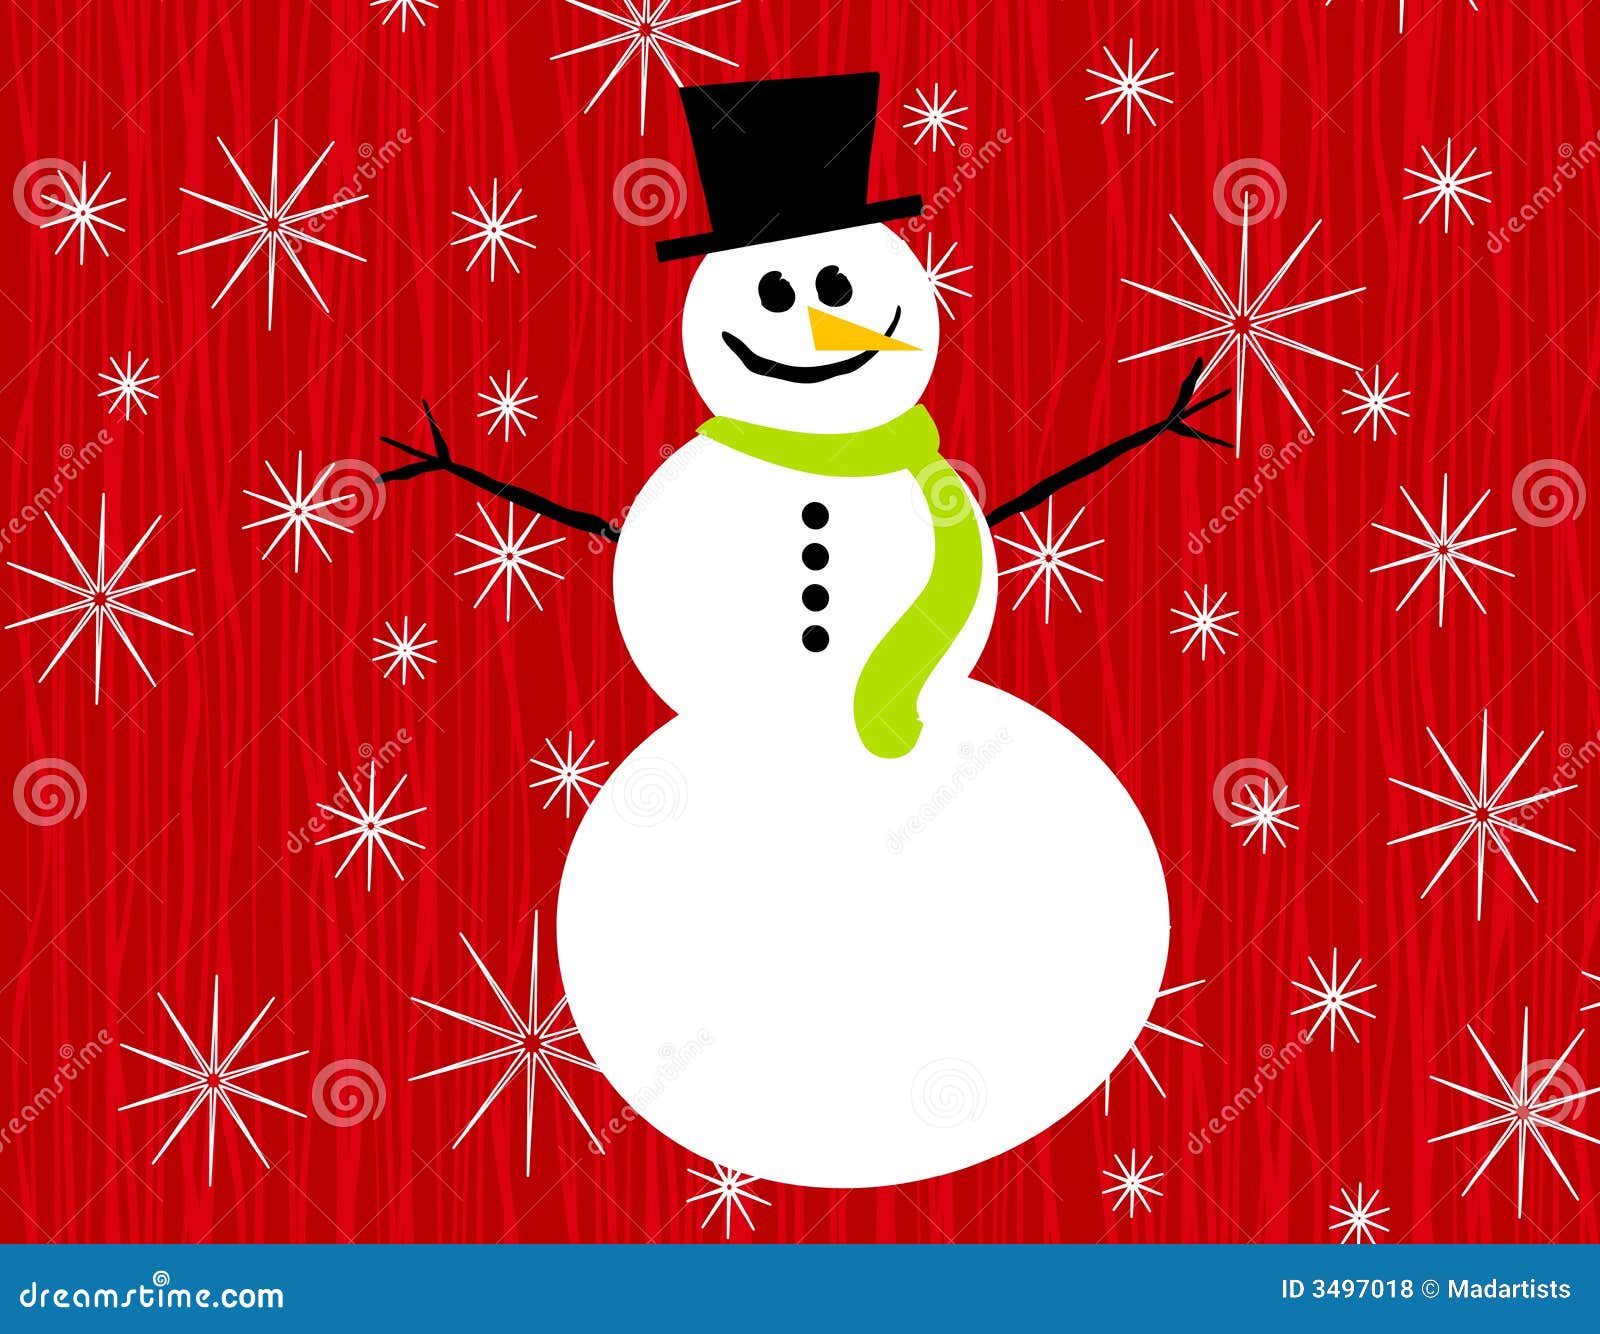 Snowman Snowflakes on Red stock illustration. Illustration of snowman ...